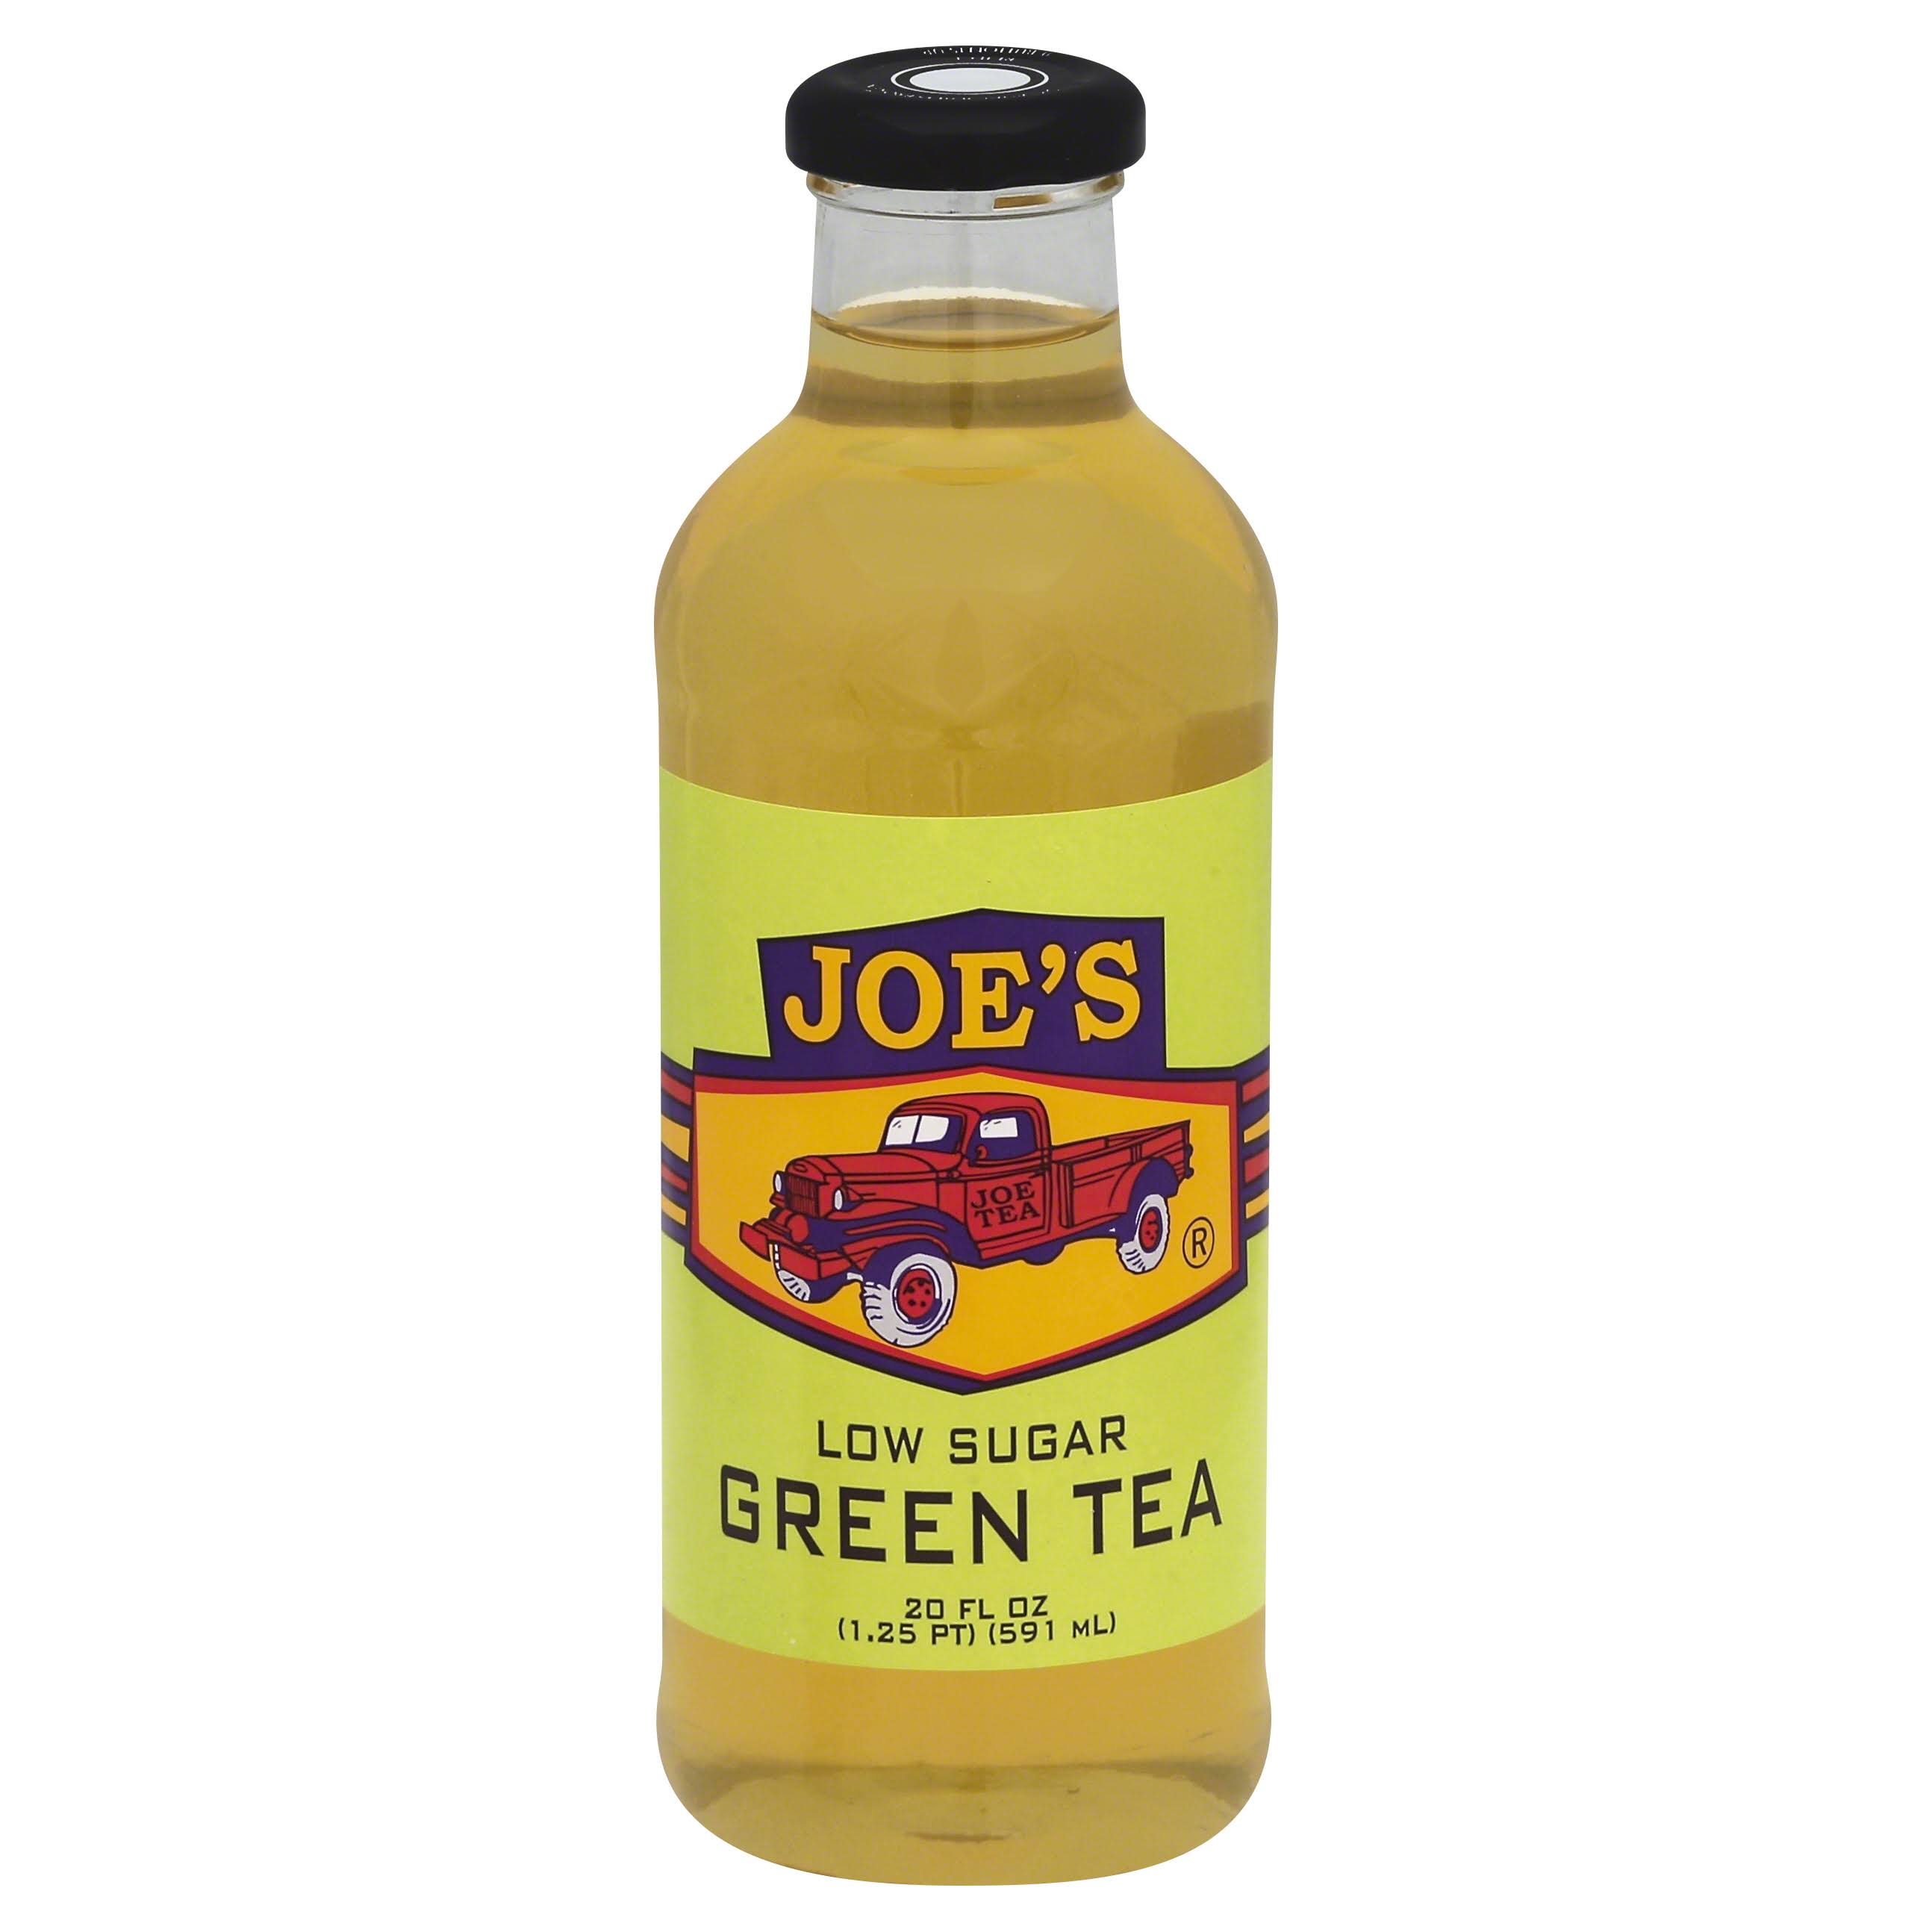 Joe Tea Green Tea, Low Sugar - 20 fl oz